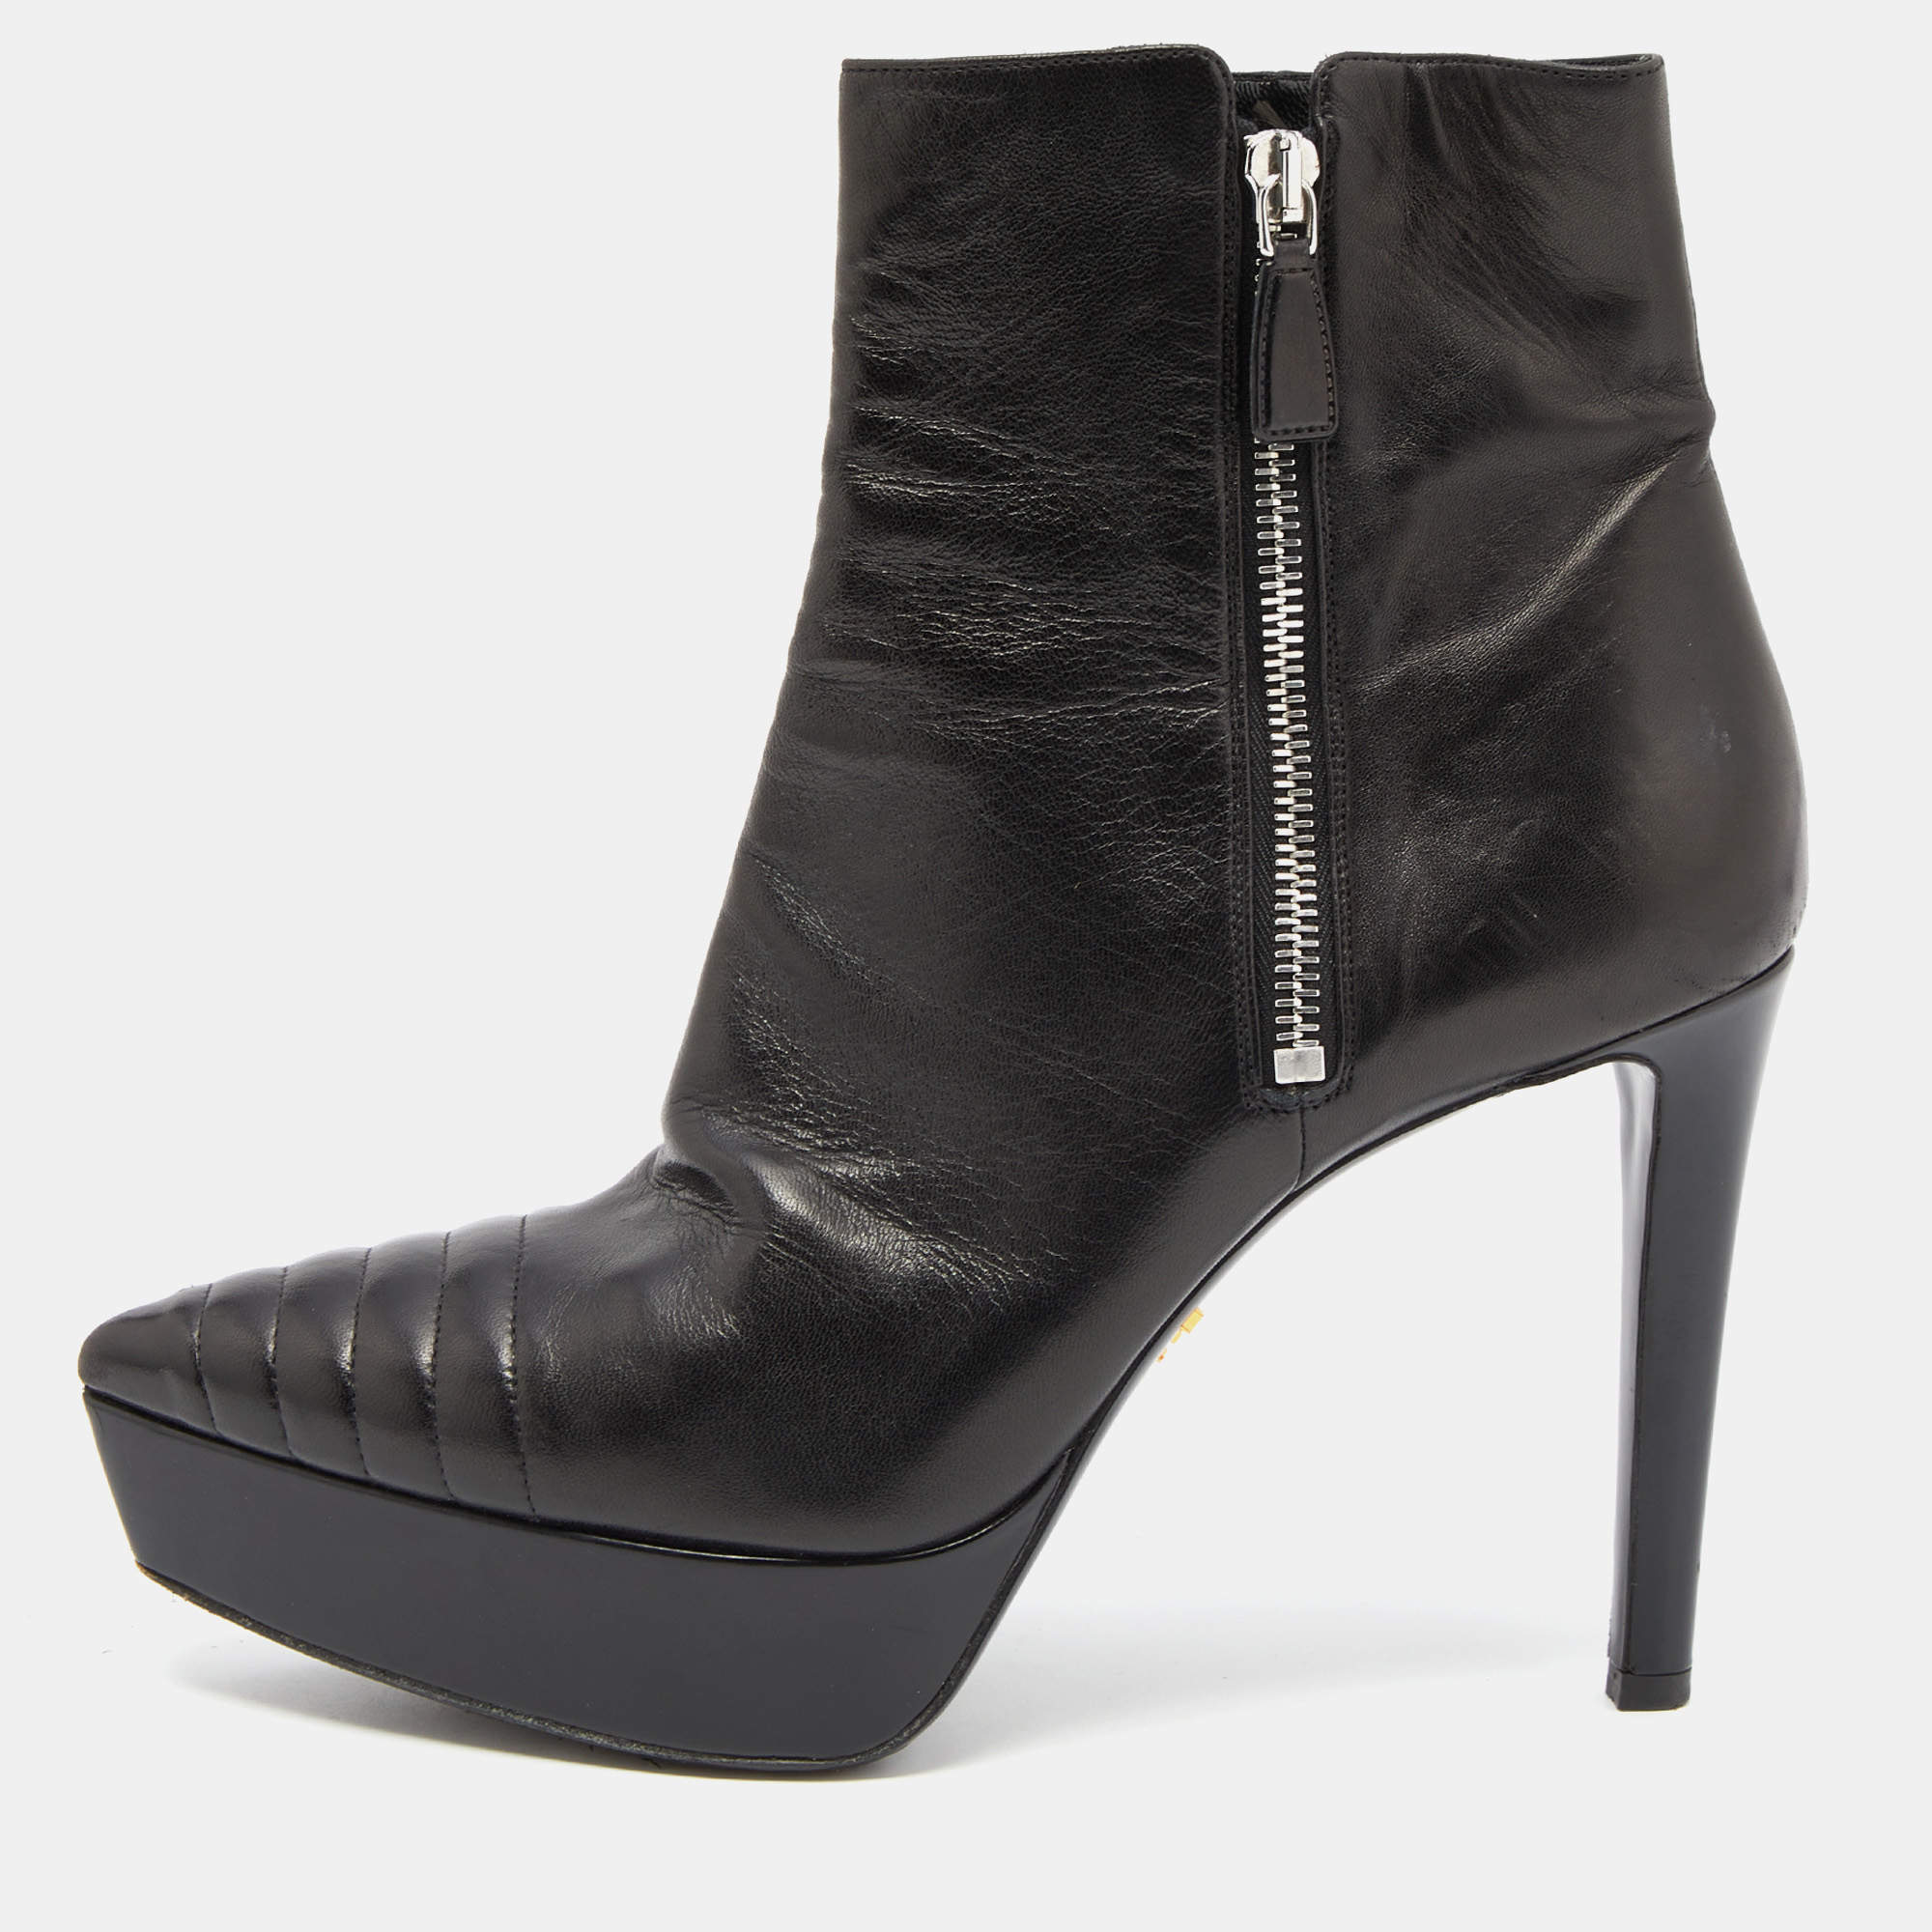 Prada Black Leather Platform Ankle Booties Size 38